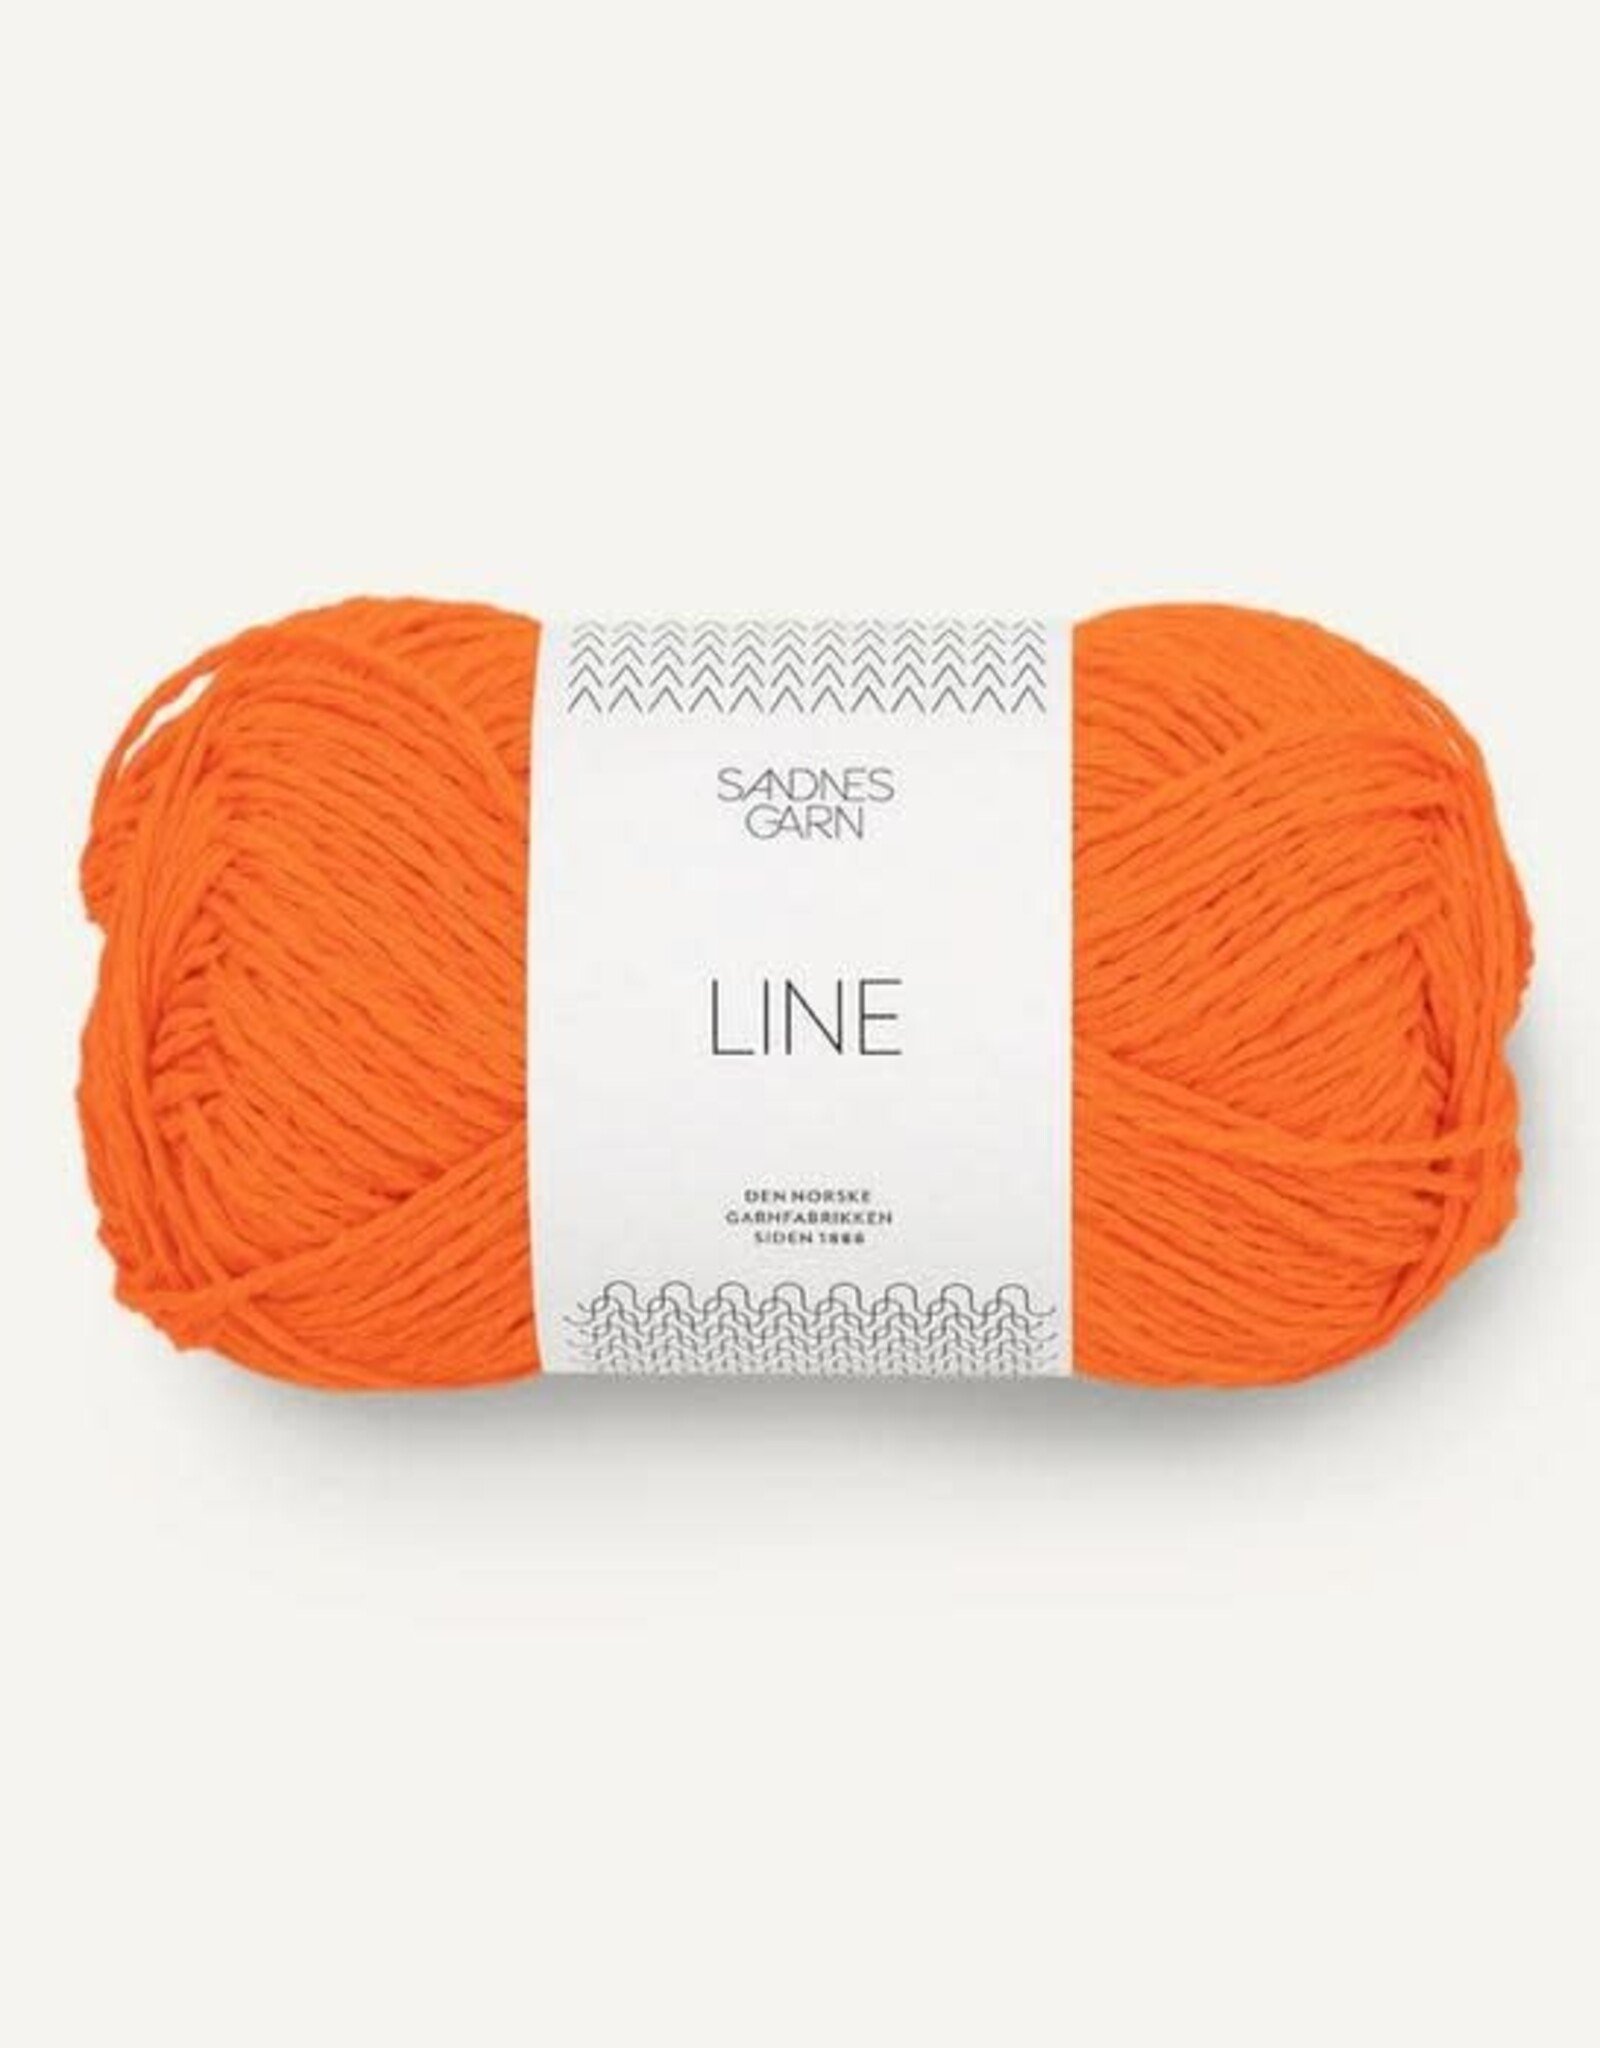 Sandnes Garn Line 3009 orange tiger